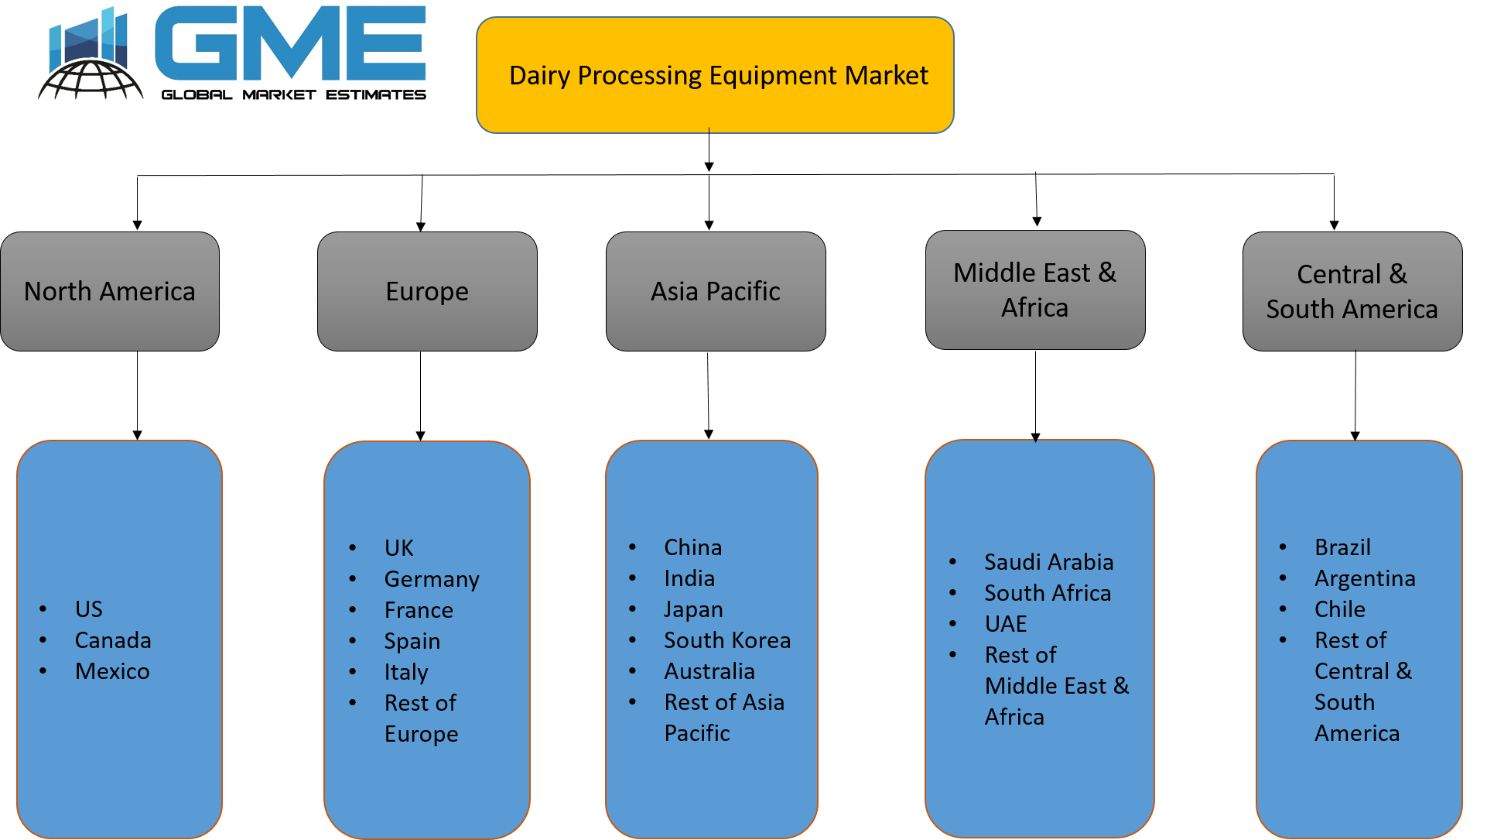 Dairy Processing Equipment Market - Regional Analysis